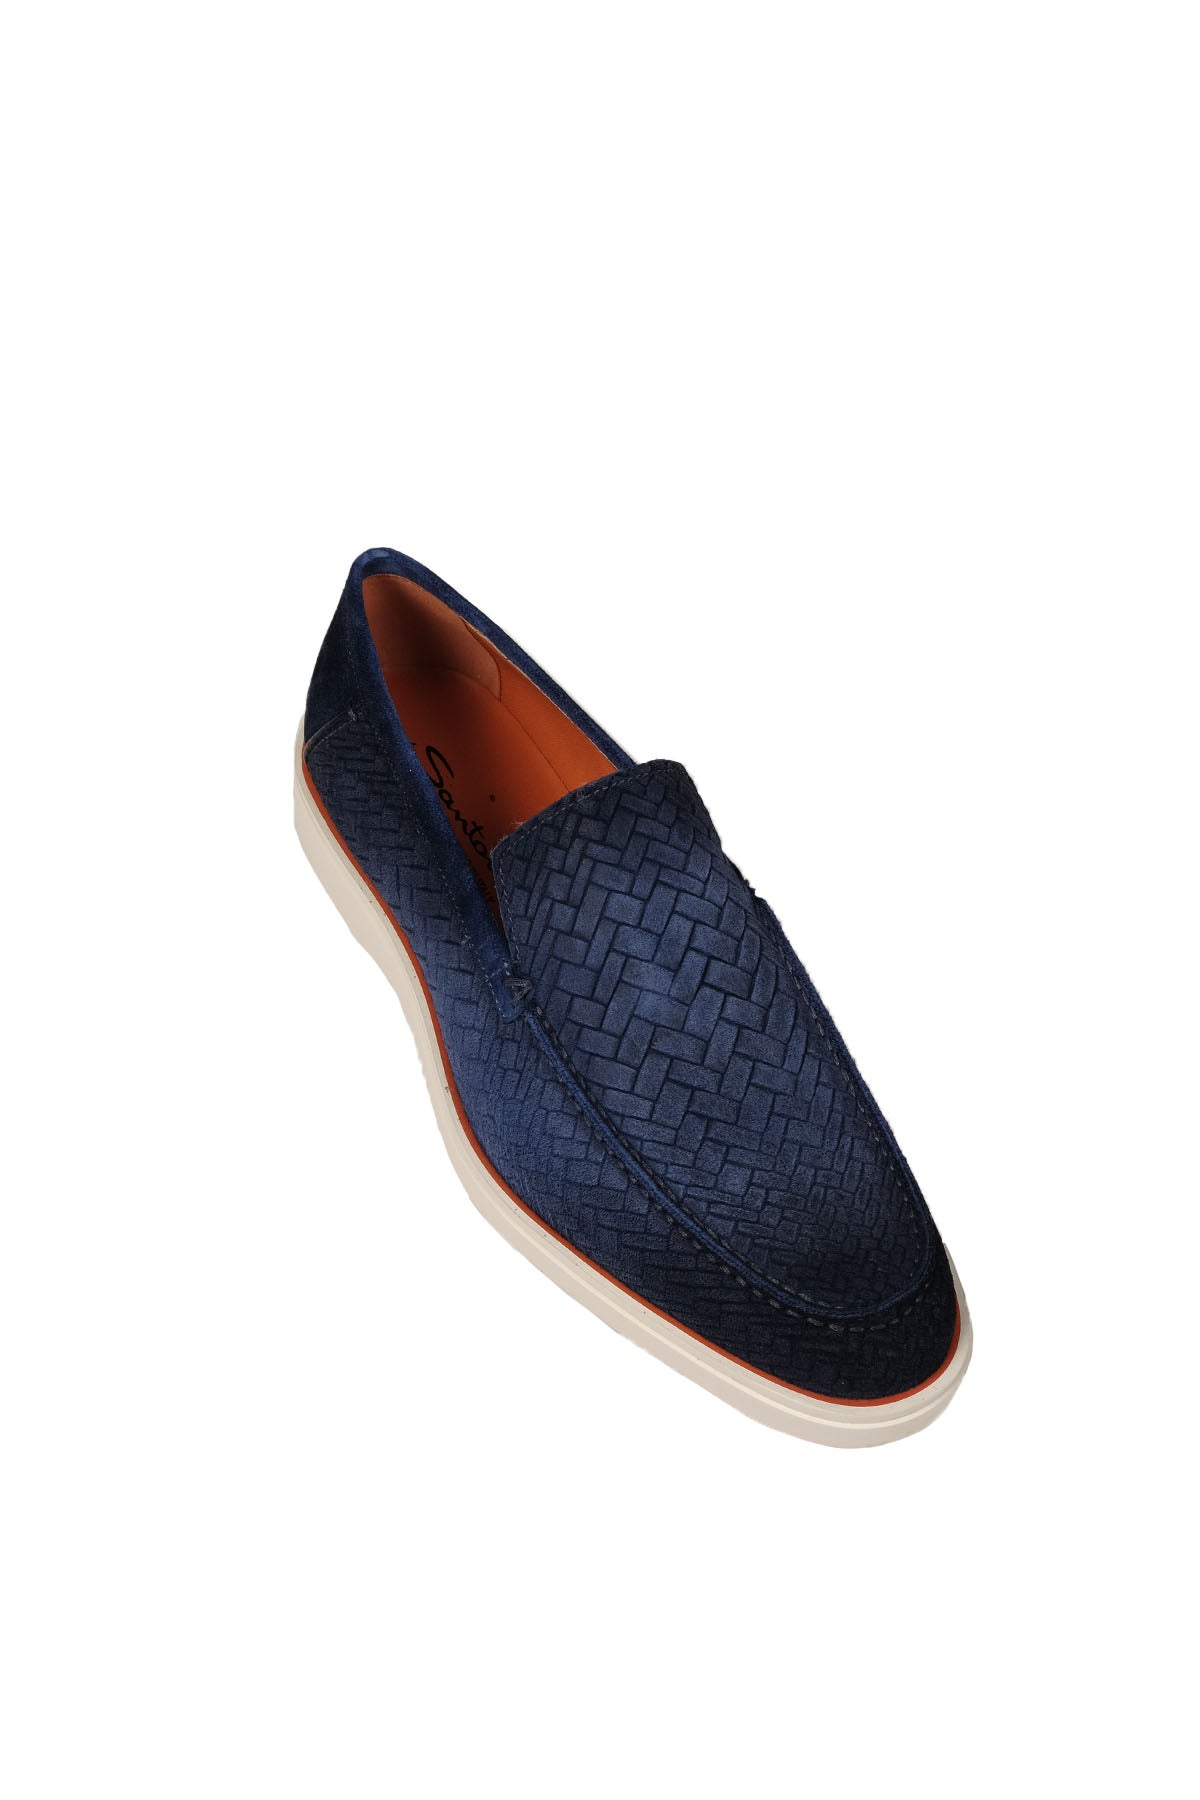 Santoni Örgü Süet Loafer Ayakkabı-Libas Trendy Fashion Store